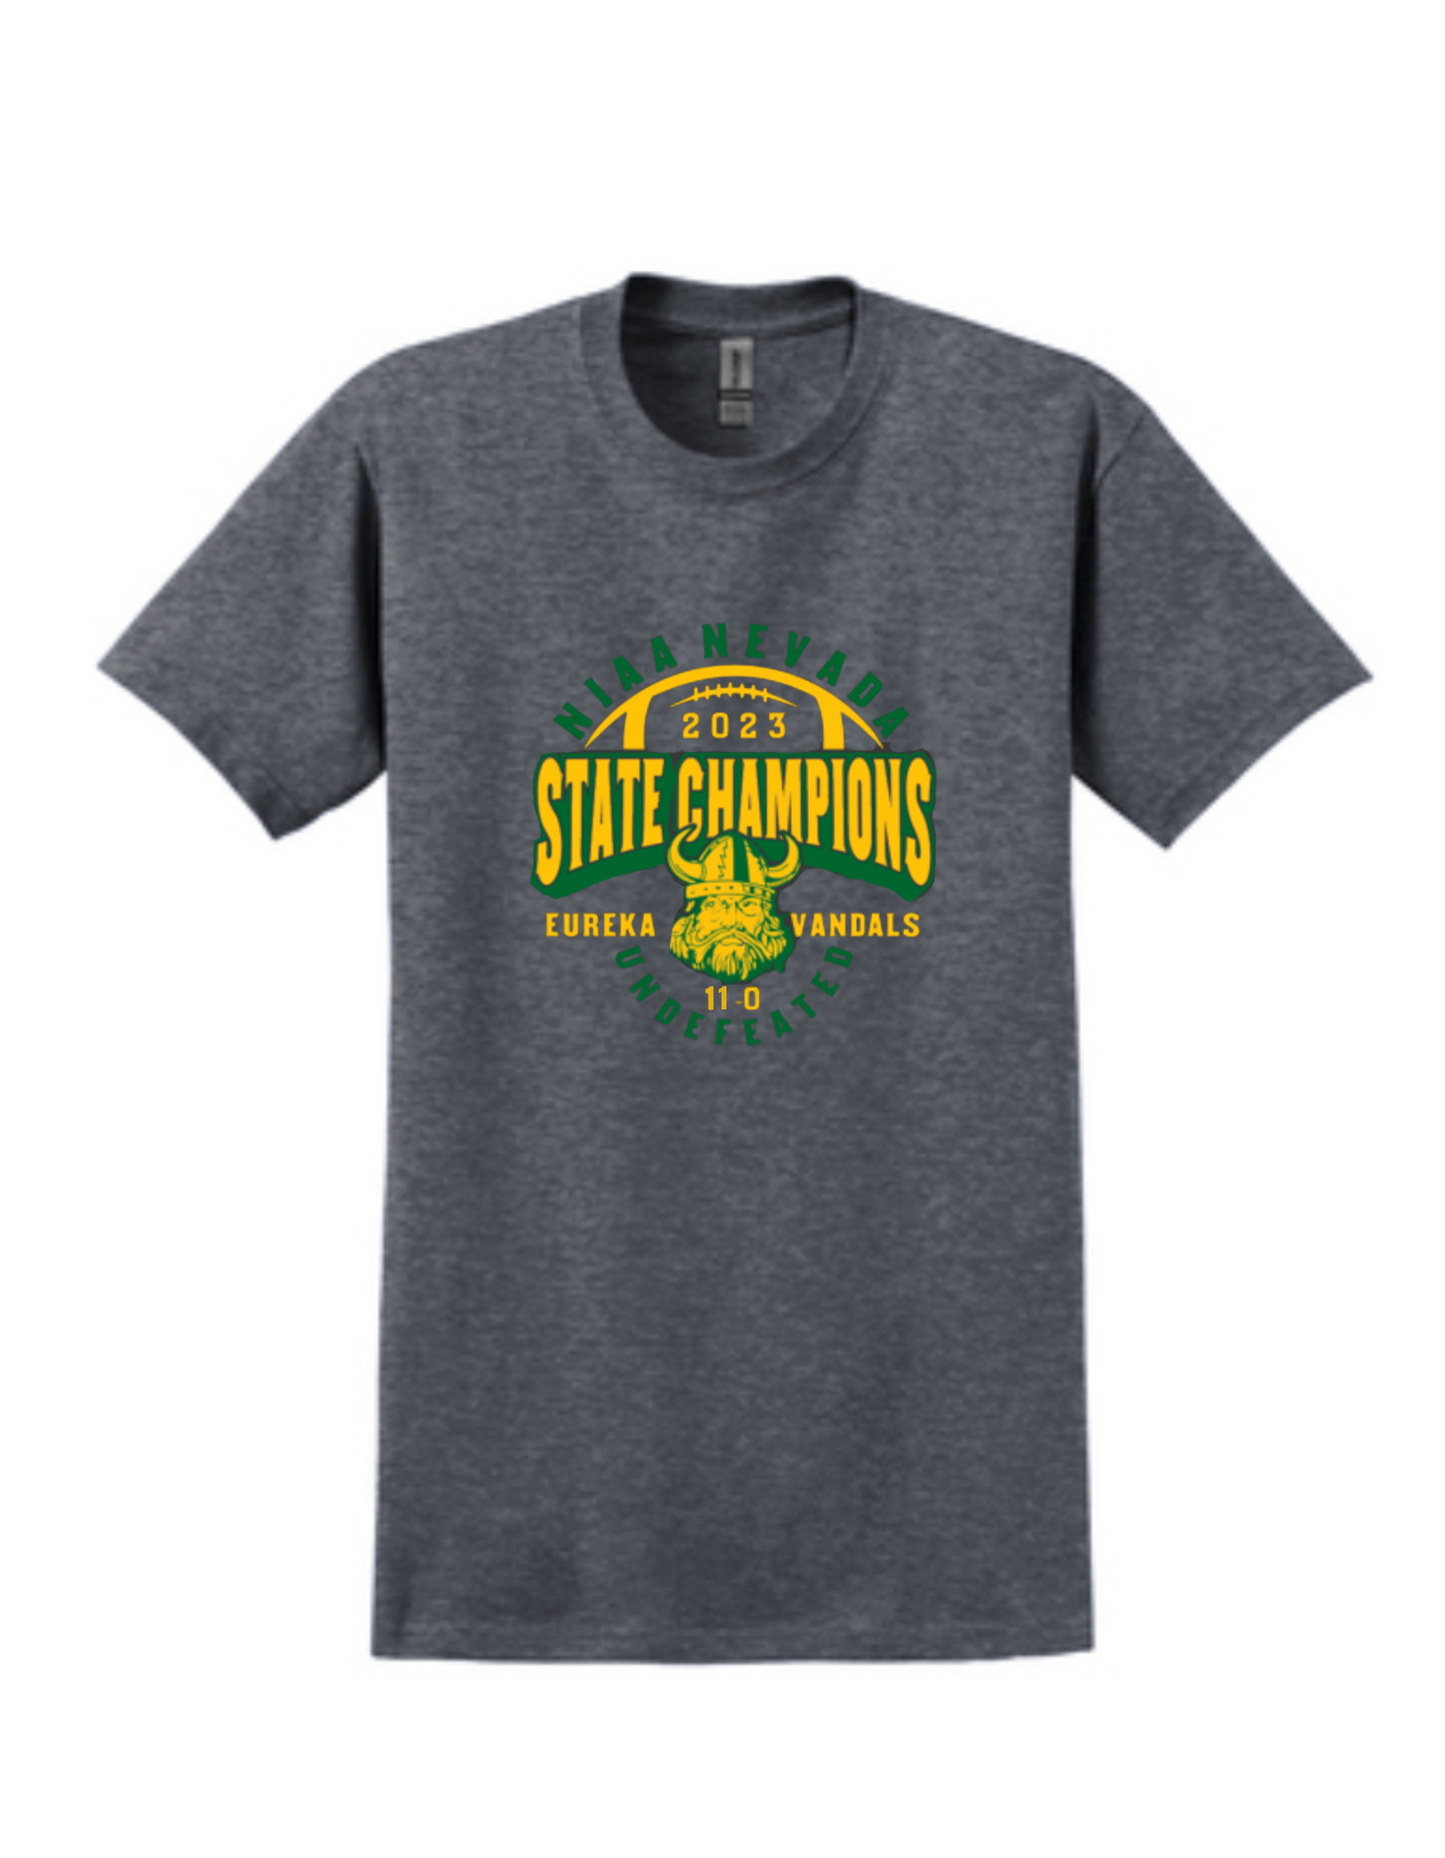 STATE CHAMPIONS Football T-Shirt